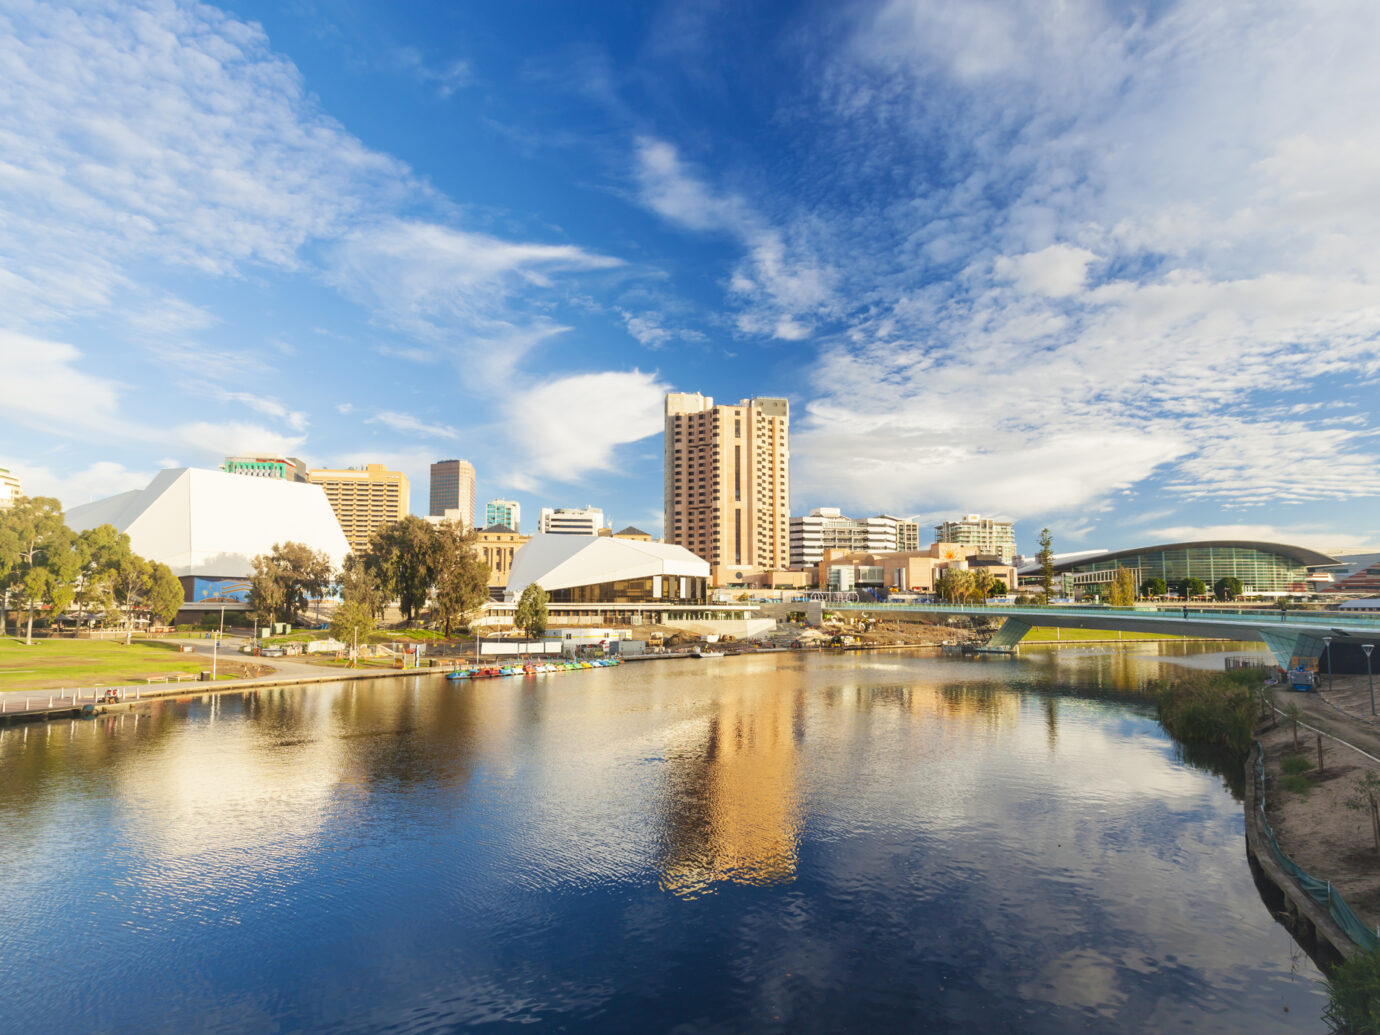 Adelaide city centre across the River Torrens